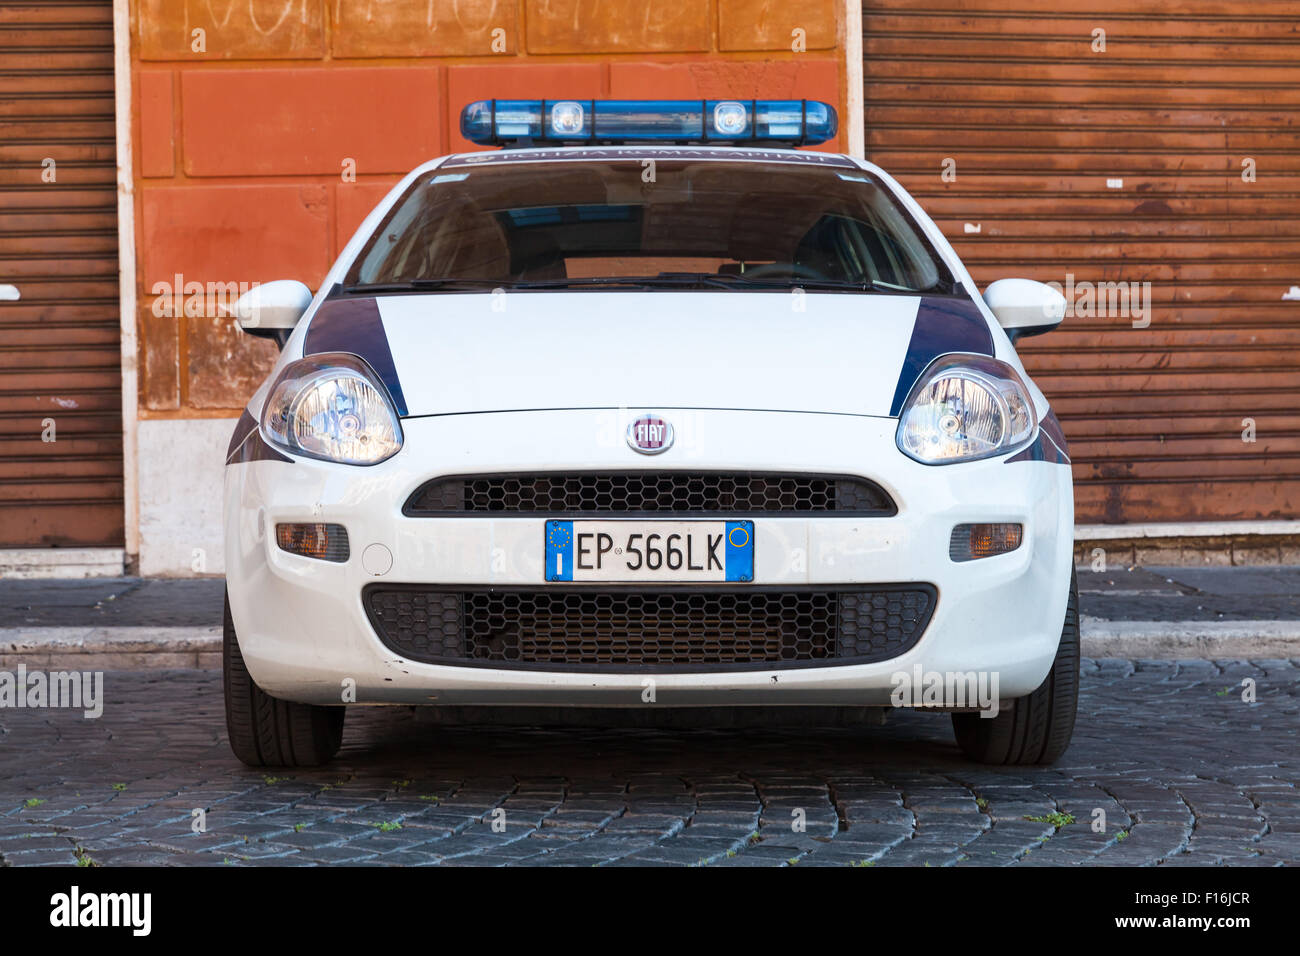 https://c8.alamy.com/comp/F16JCR/rome-italy-august-8-2015-white-fiat-fiat-grande-punto-police-car-stands-F16JCR.jpg